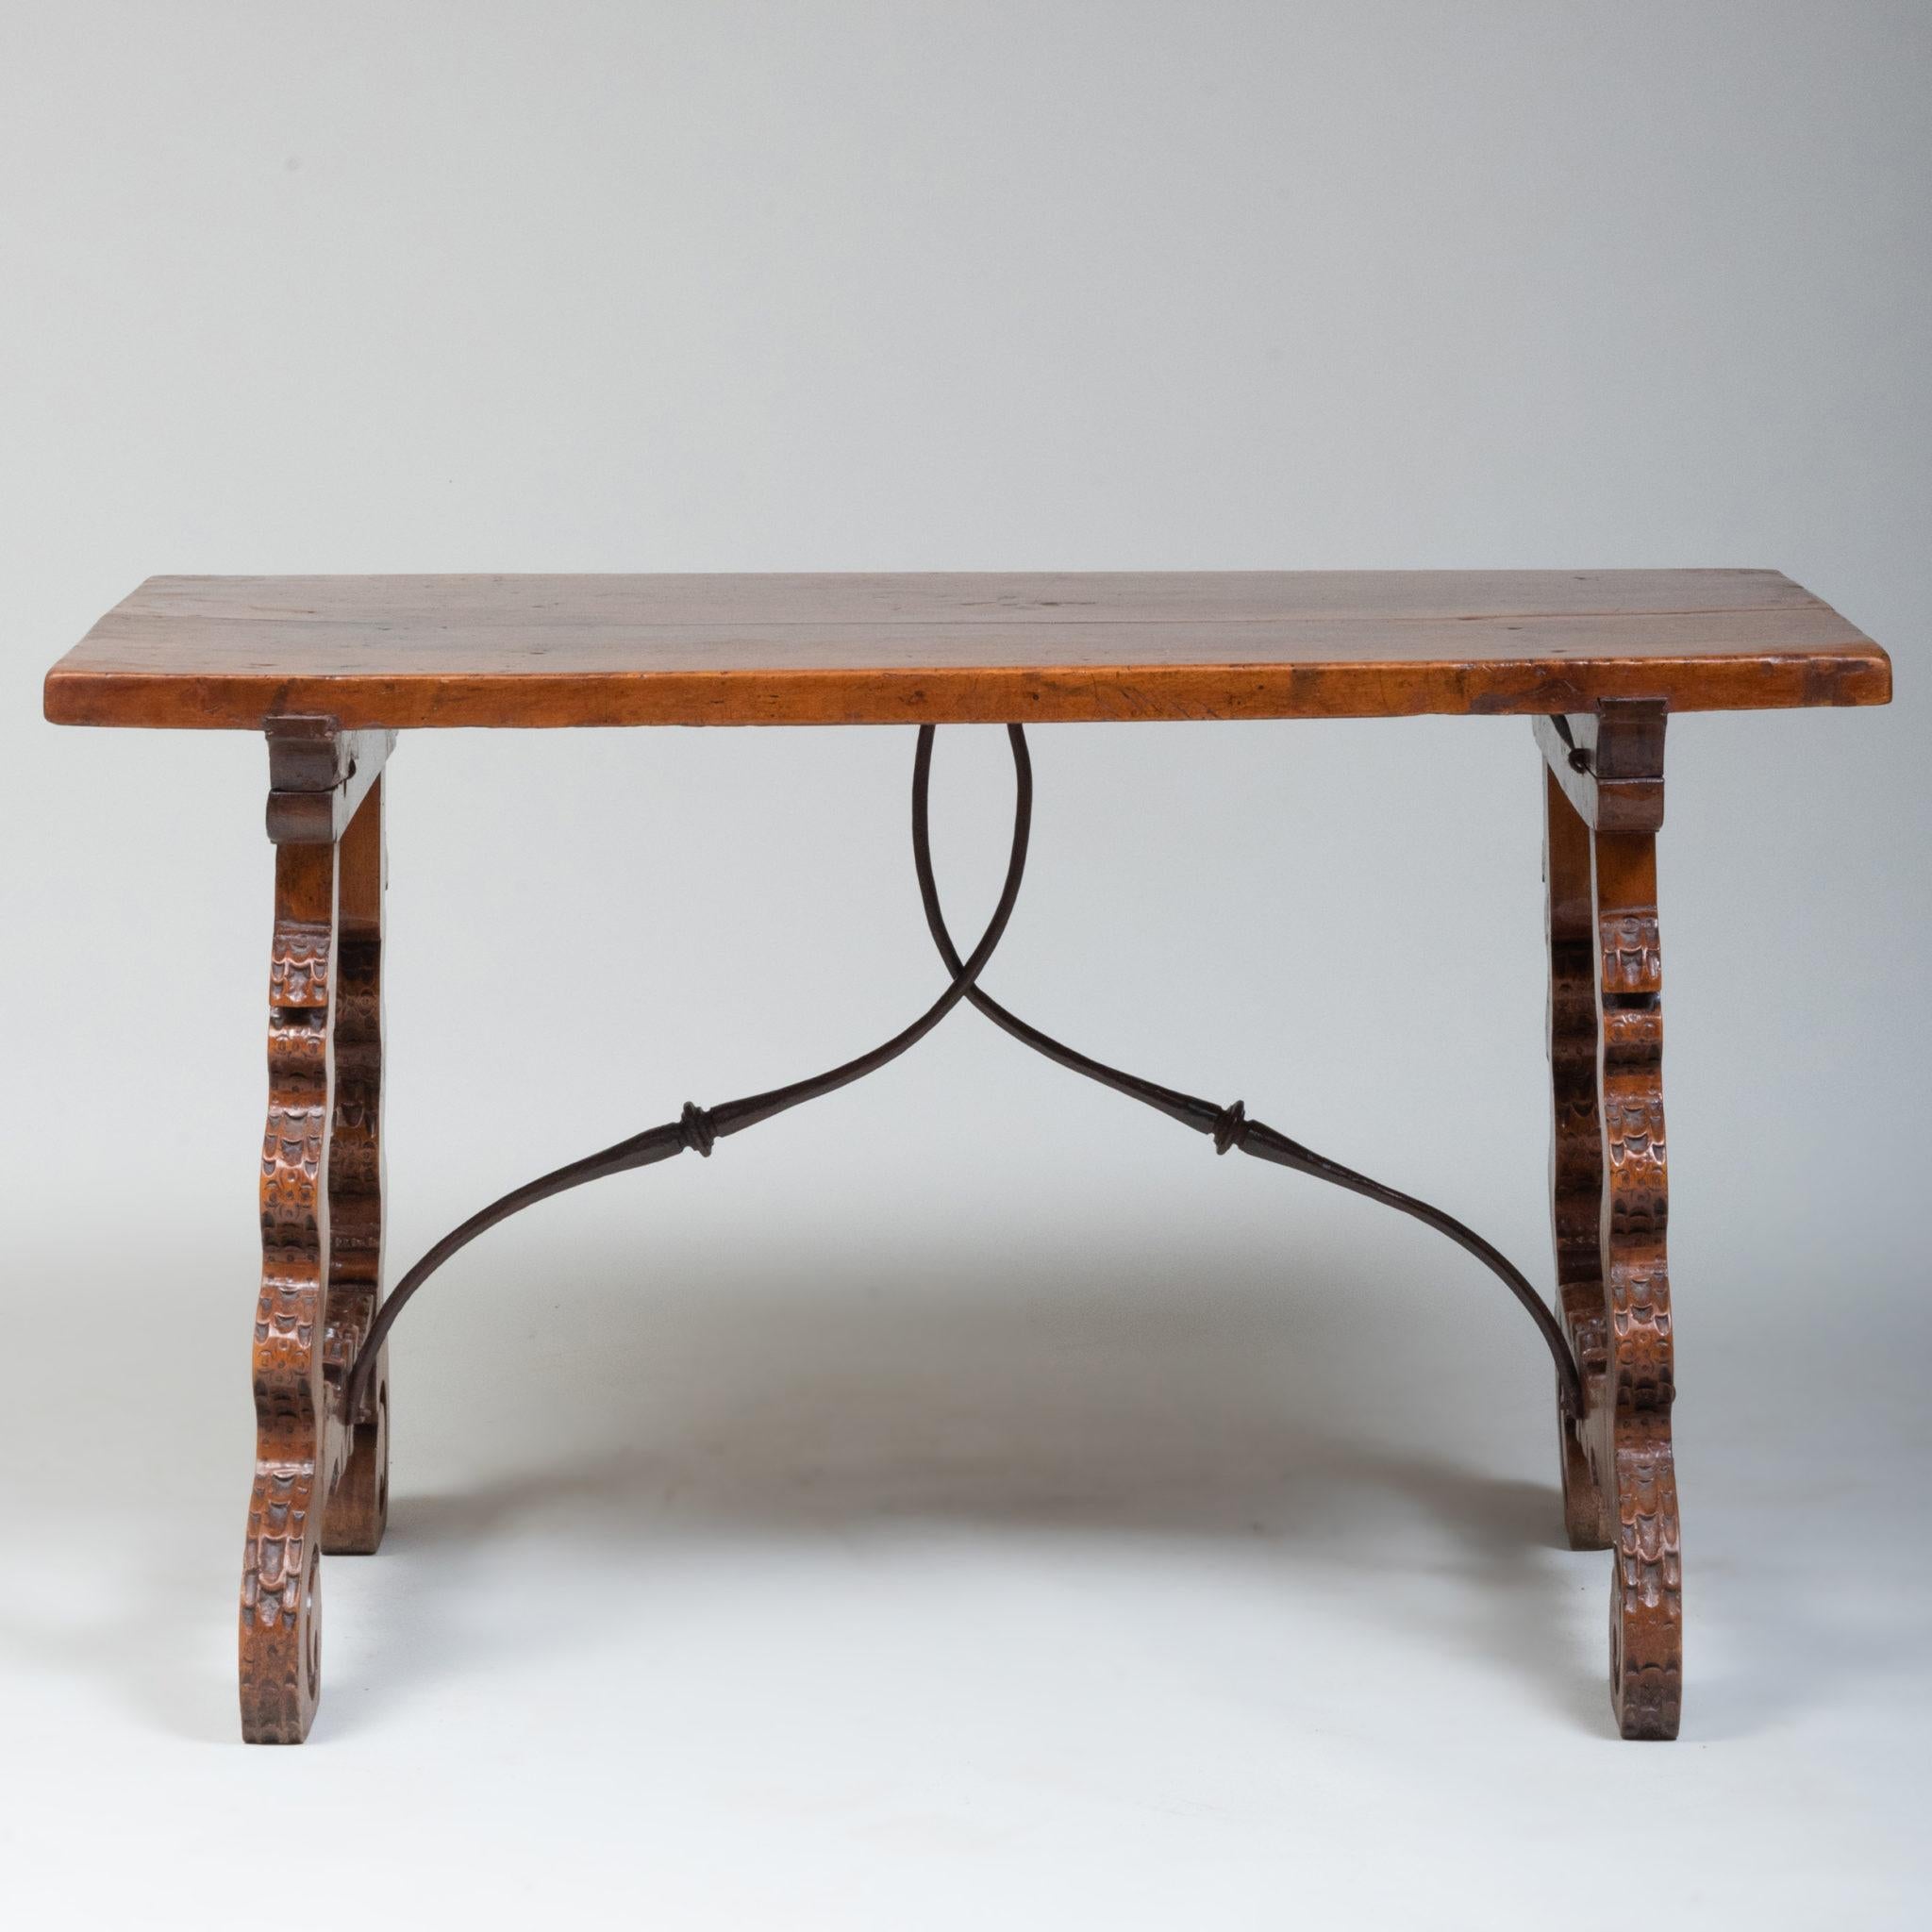 19th Century Italian or Spanish Walnut Trestle Table For Sale